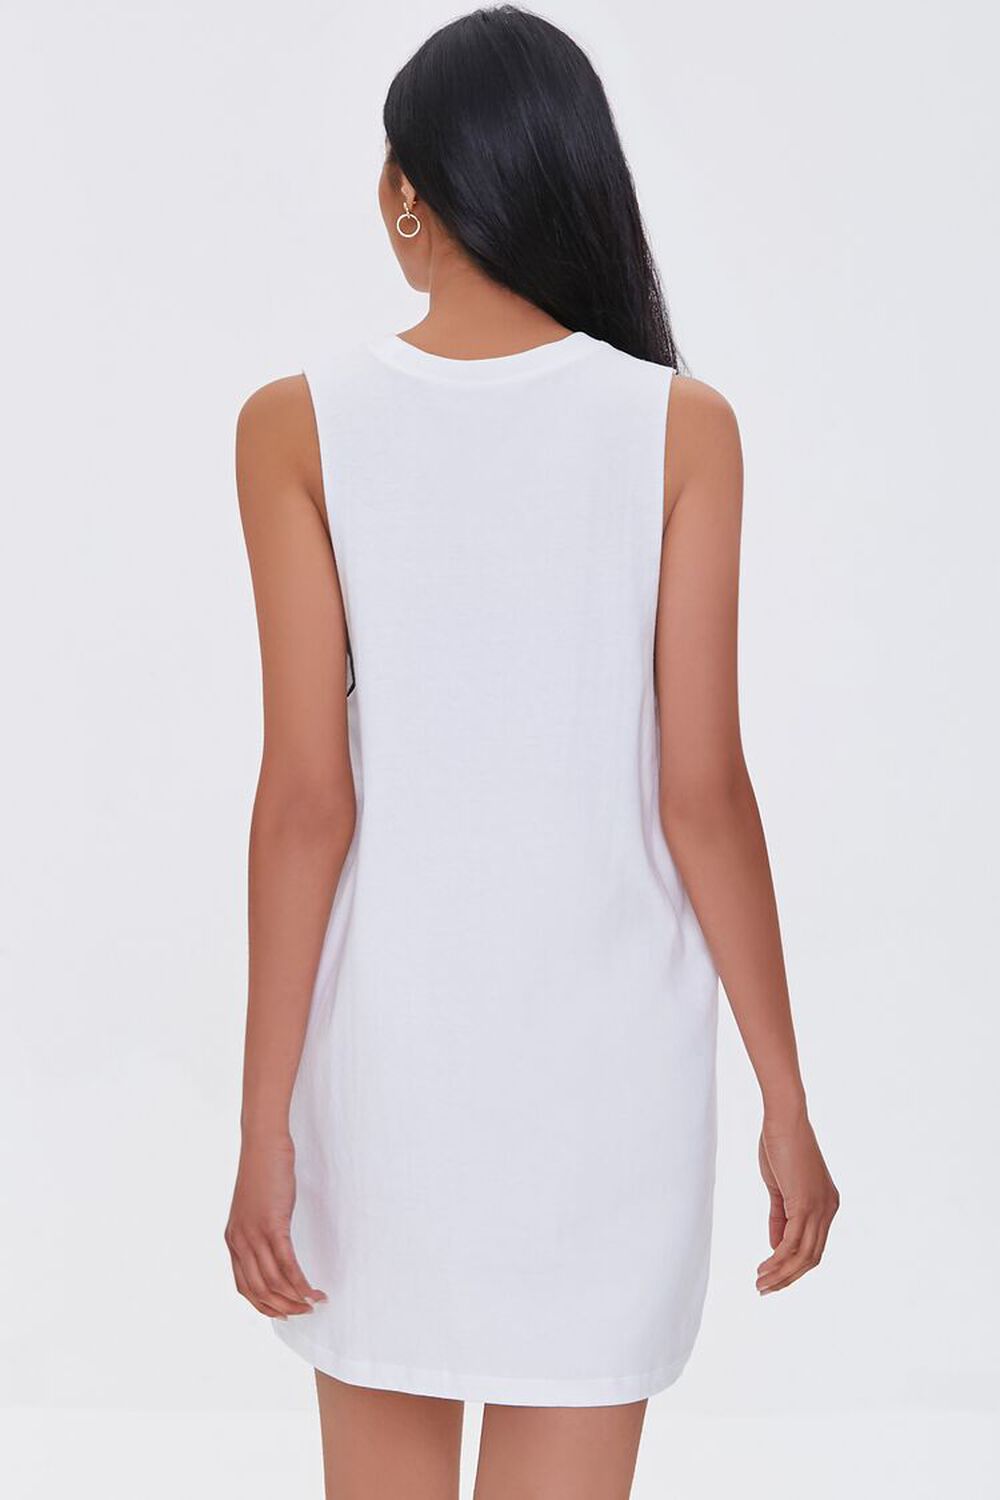 WHITE Muscle Tee Mini Dress, image 3